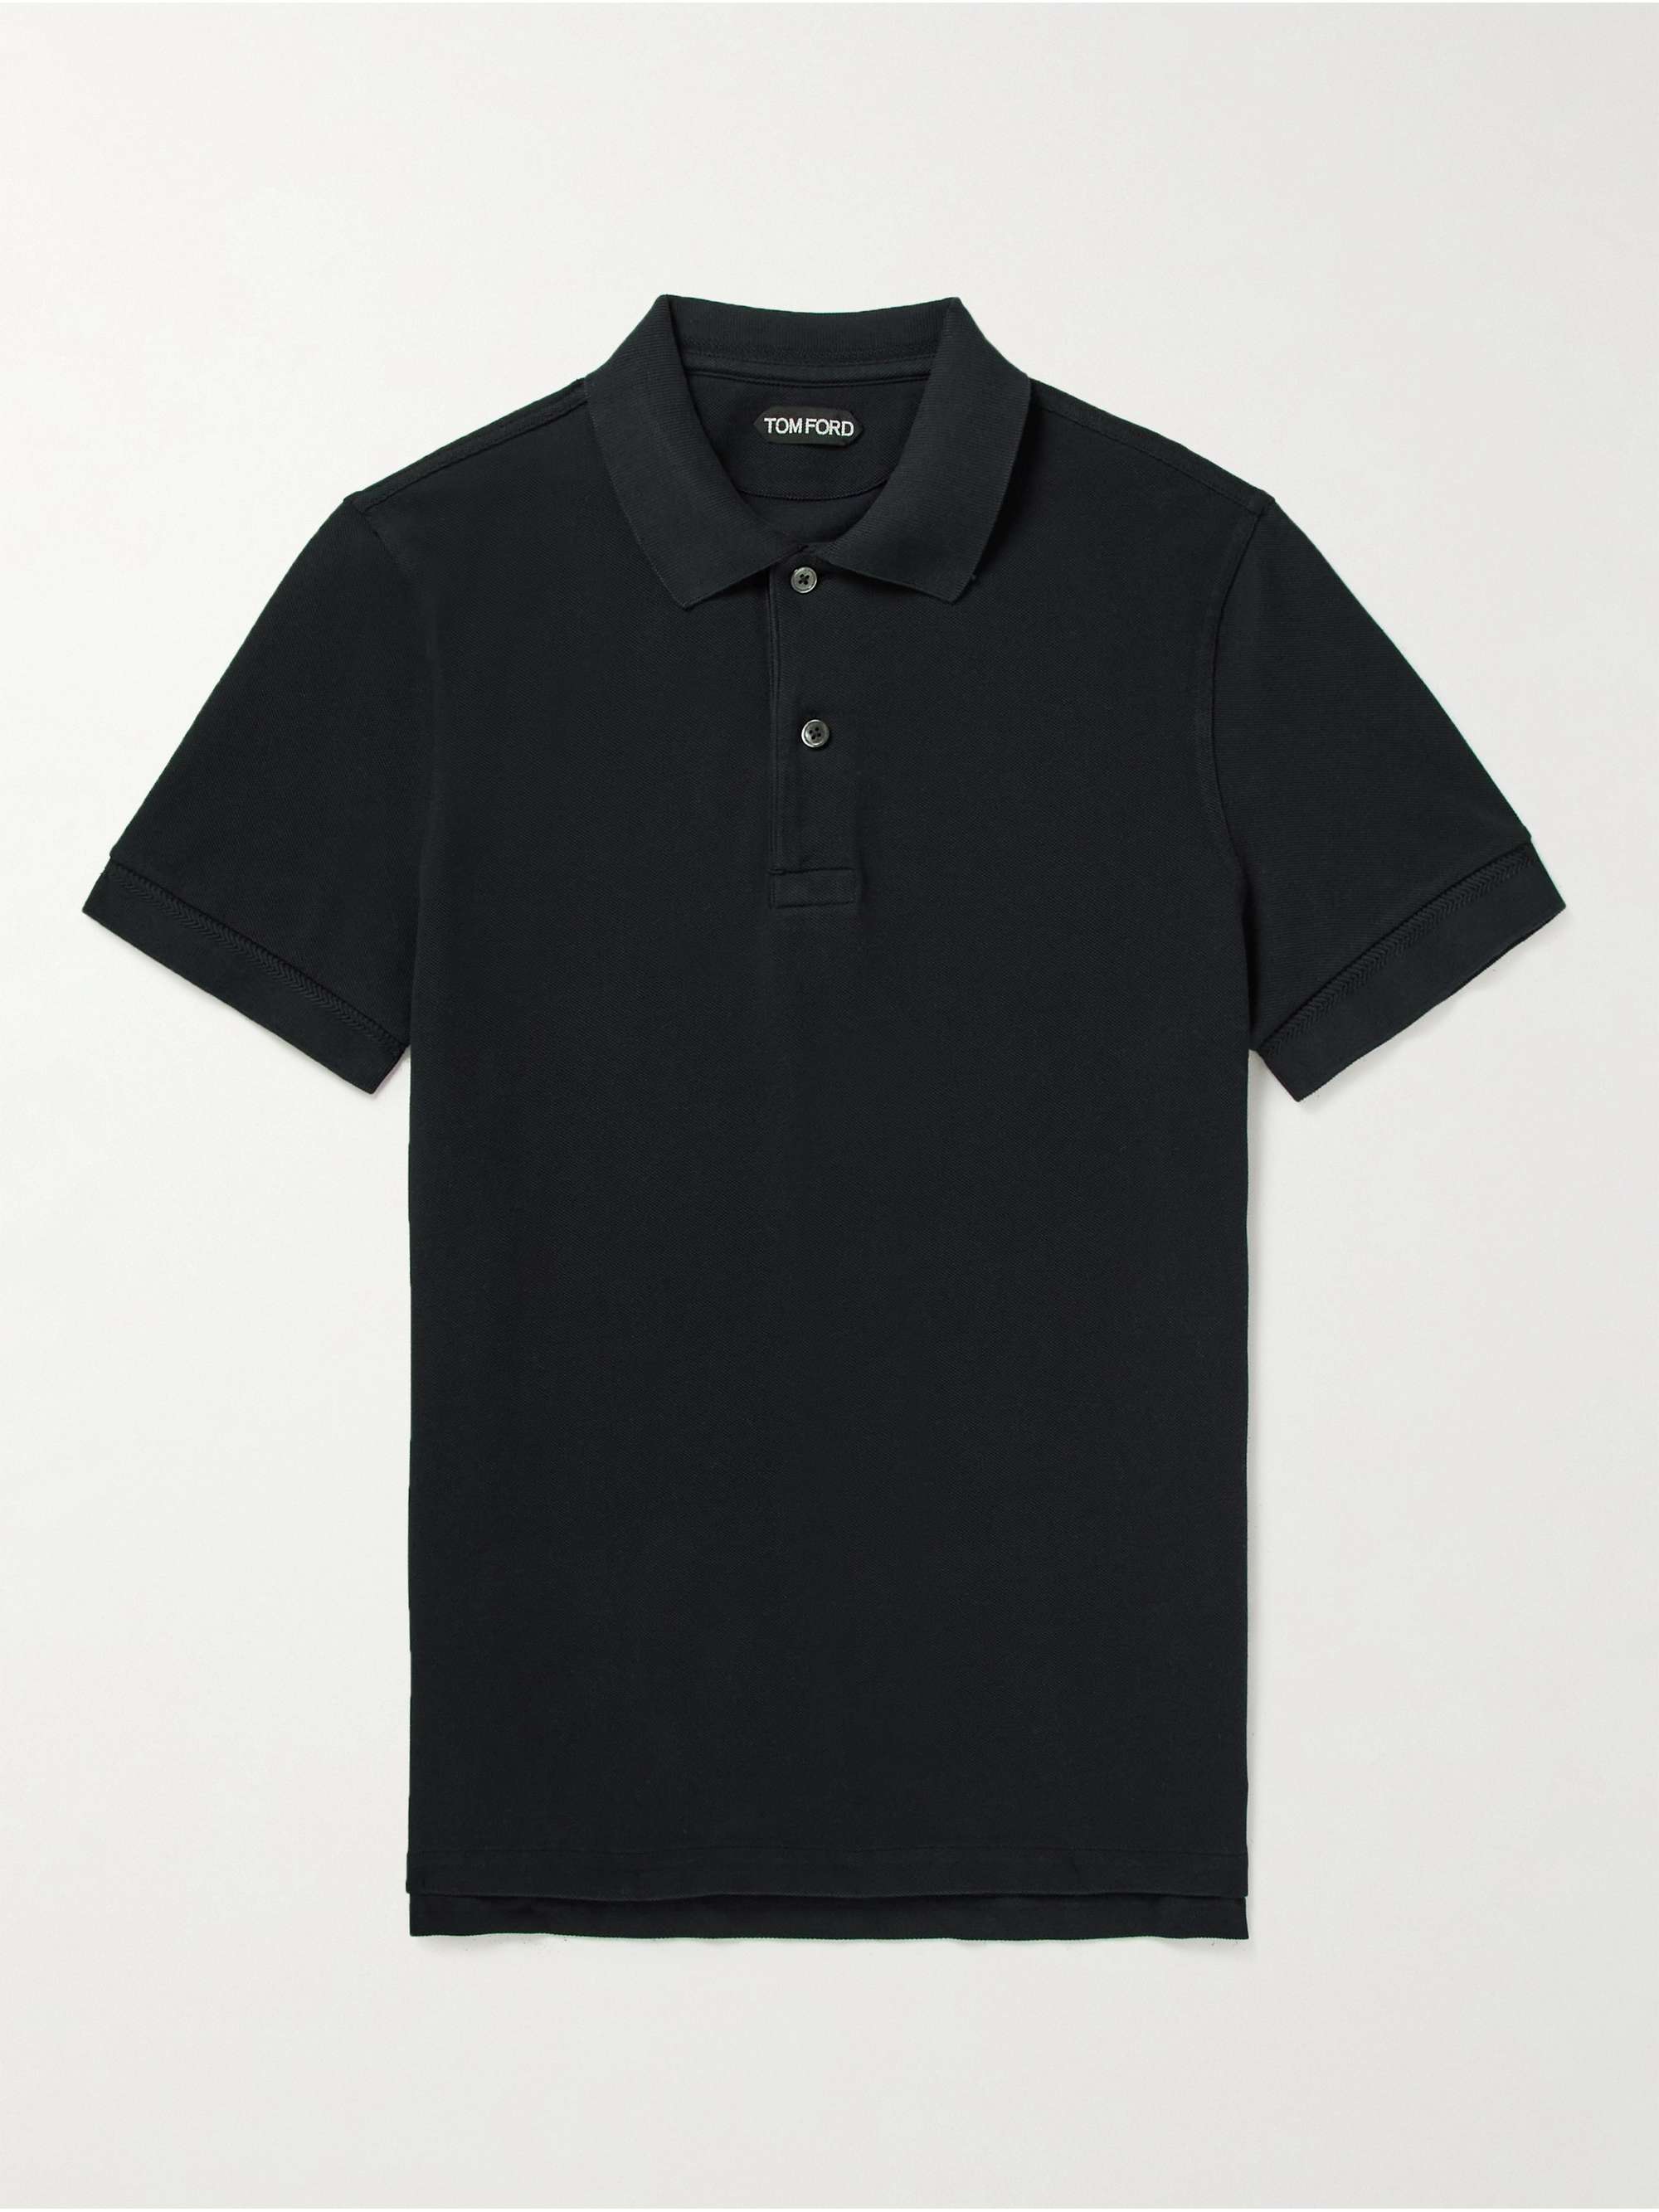 TOM FORD Cotton-Piqué Polo Shirt for Men | MR PORTER